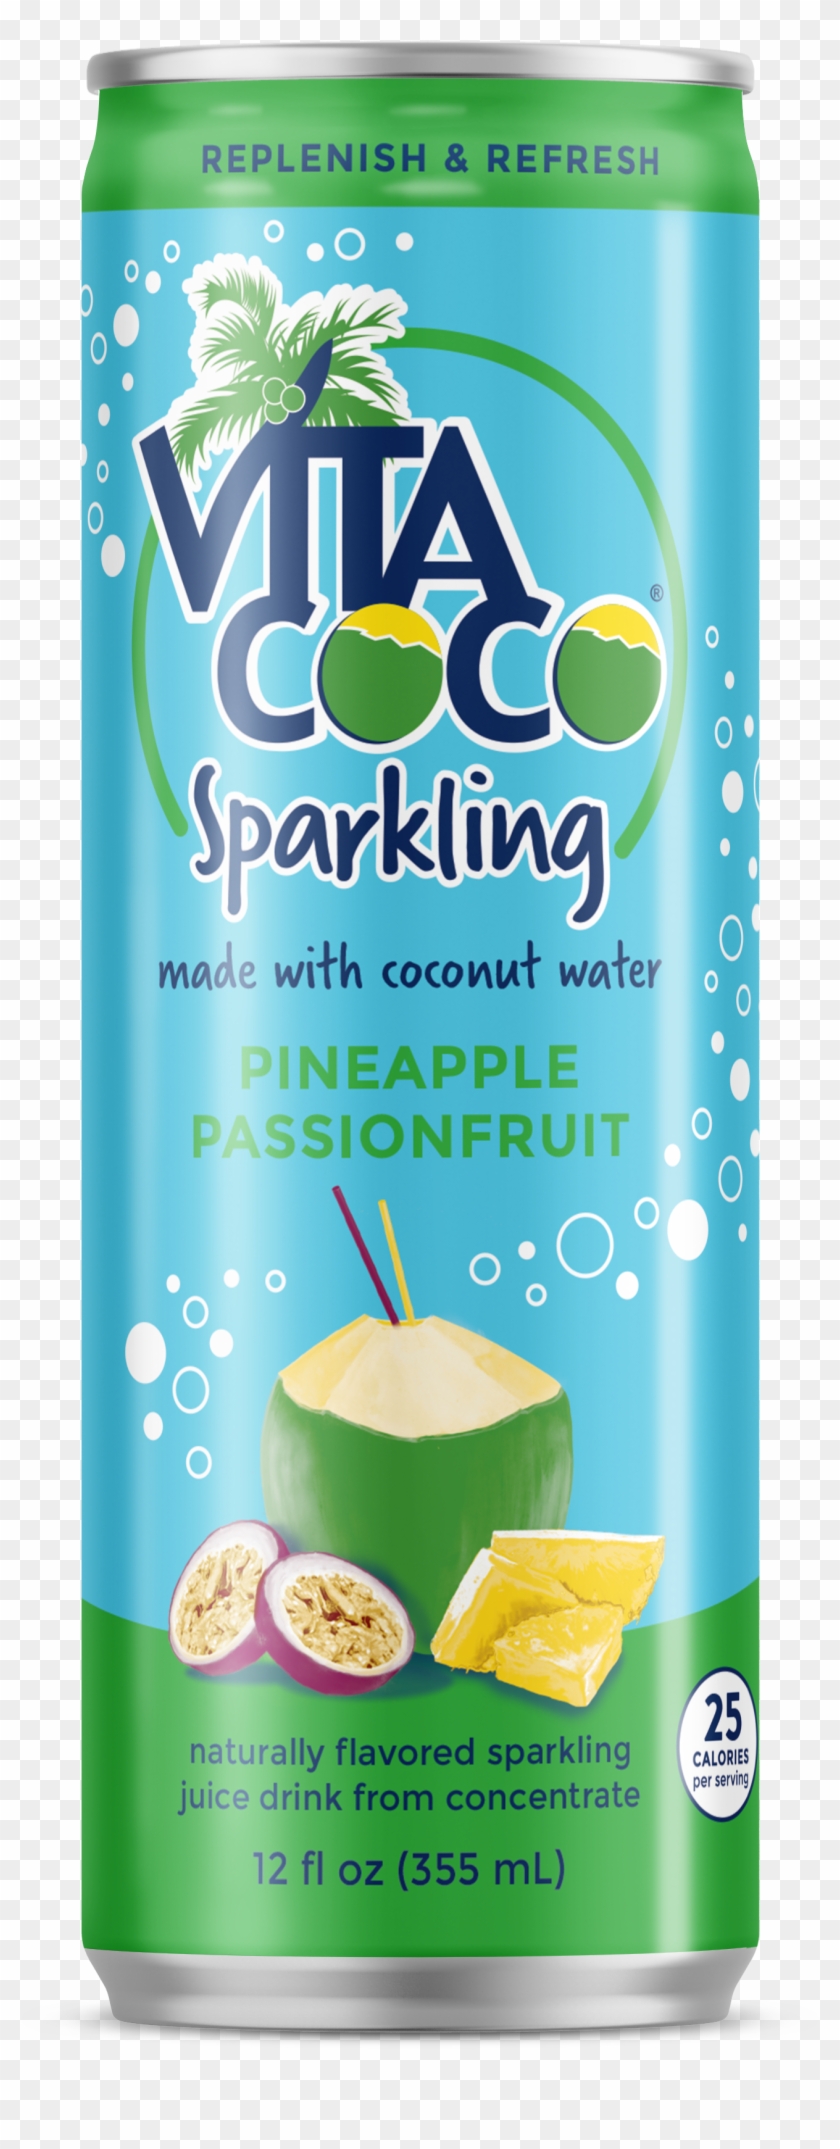 1528309754-us Vcs Pineapplepassionfruit 355ml Render - Vita Coco Sparkling Pineapple Passion Fruit Clipart #2924612